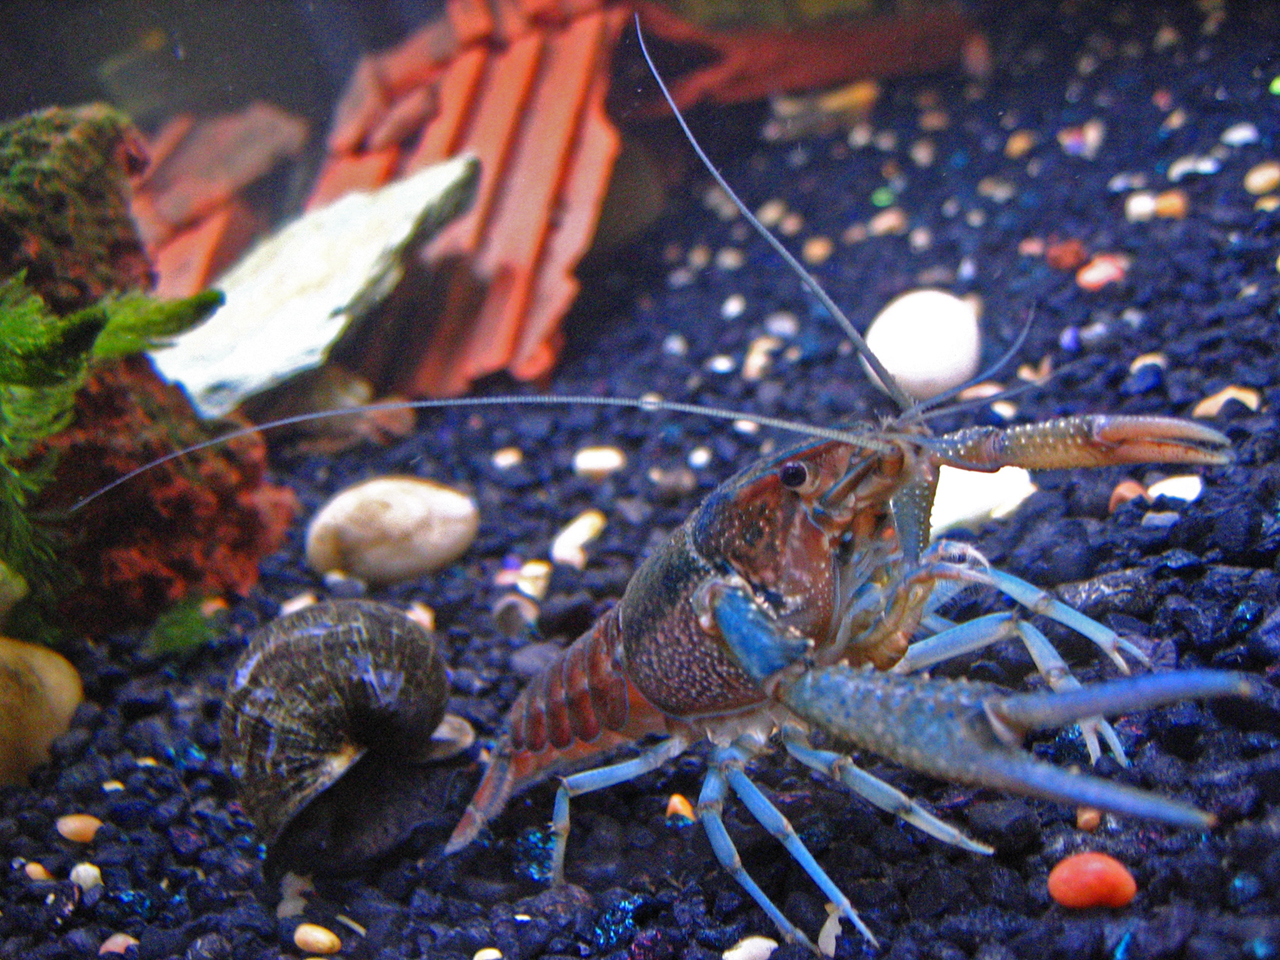 Crayfish invade Kodiak waters